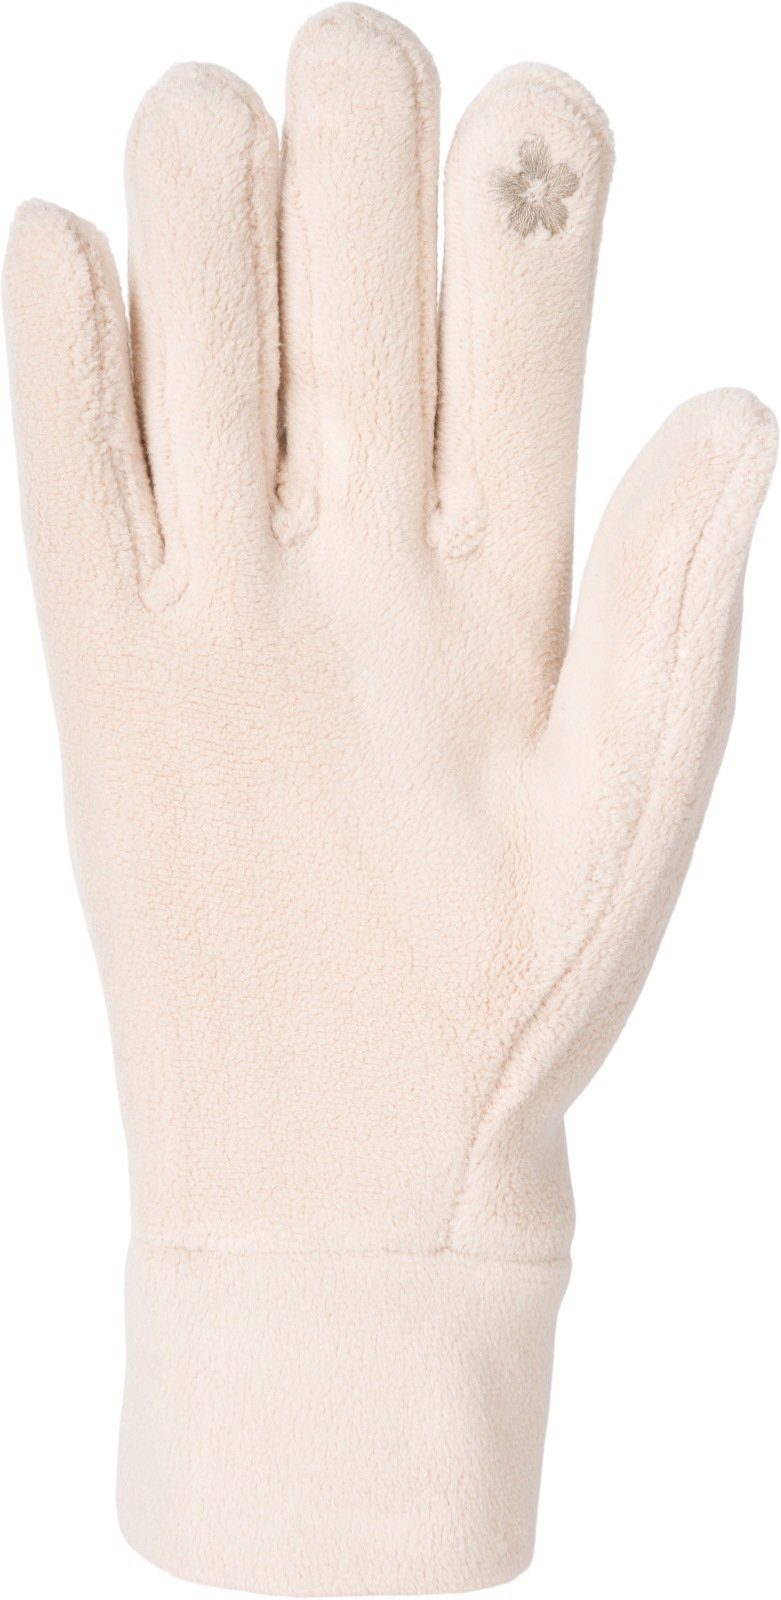 styleBREAKER Fleecehandschuhe Einfarbige Fleece Handschuhe Beige Touchscreen